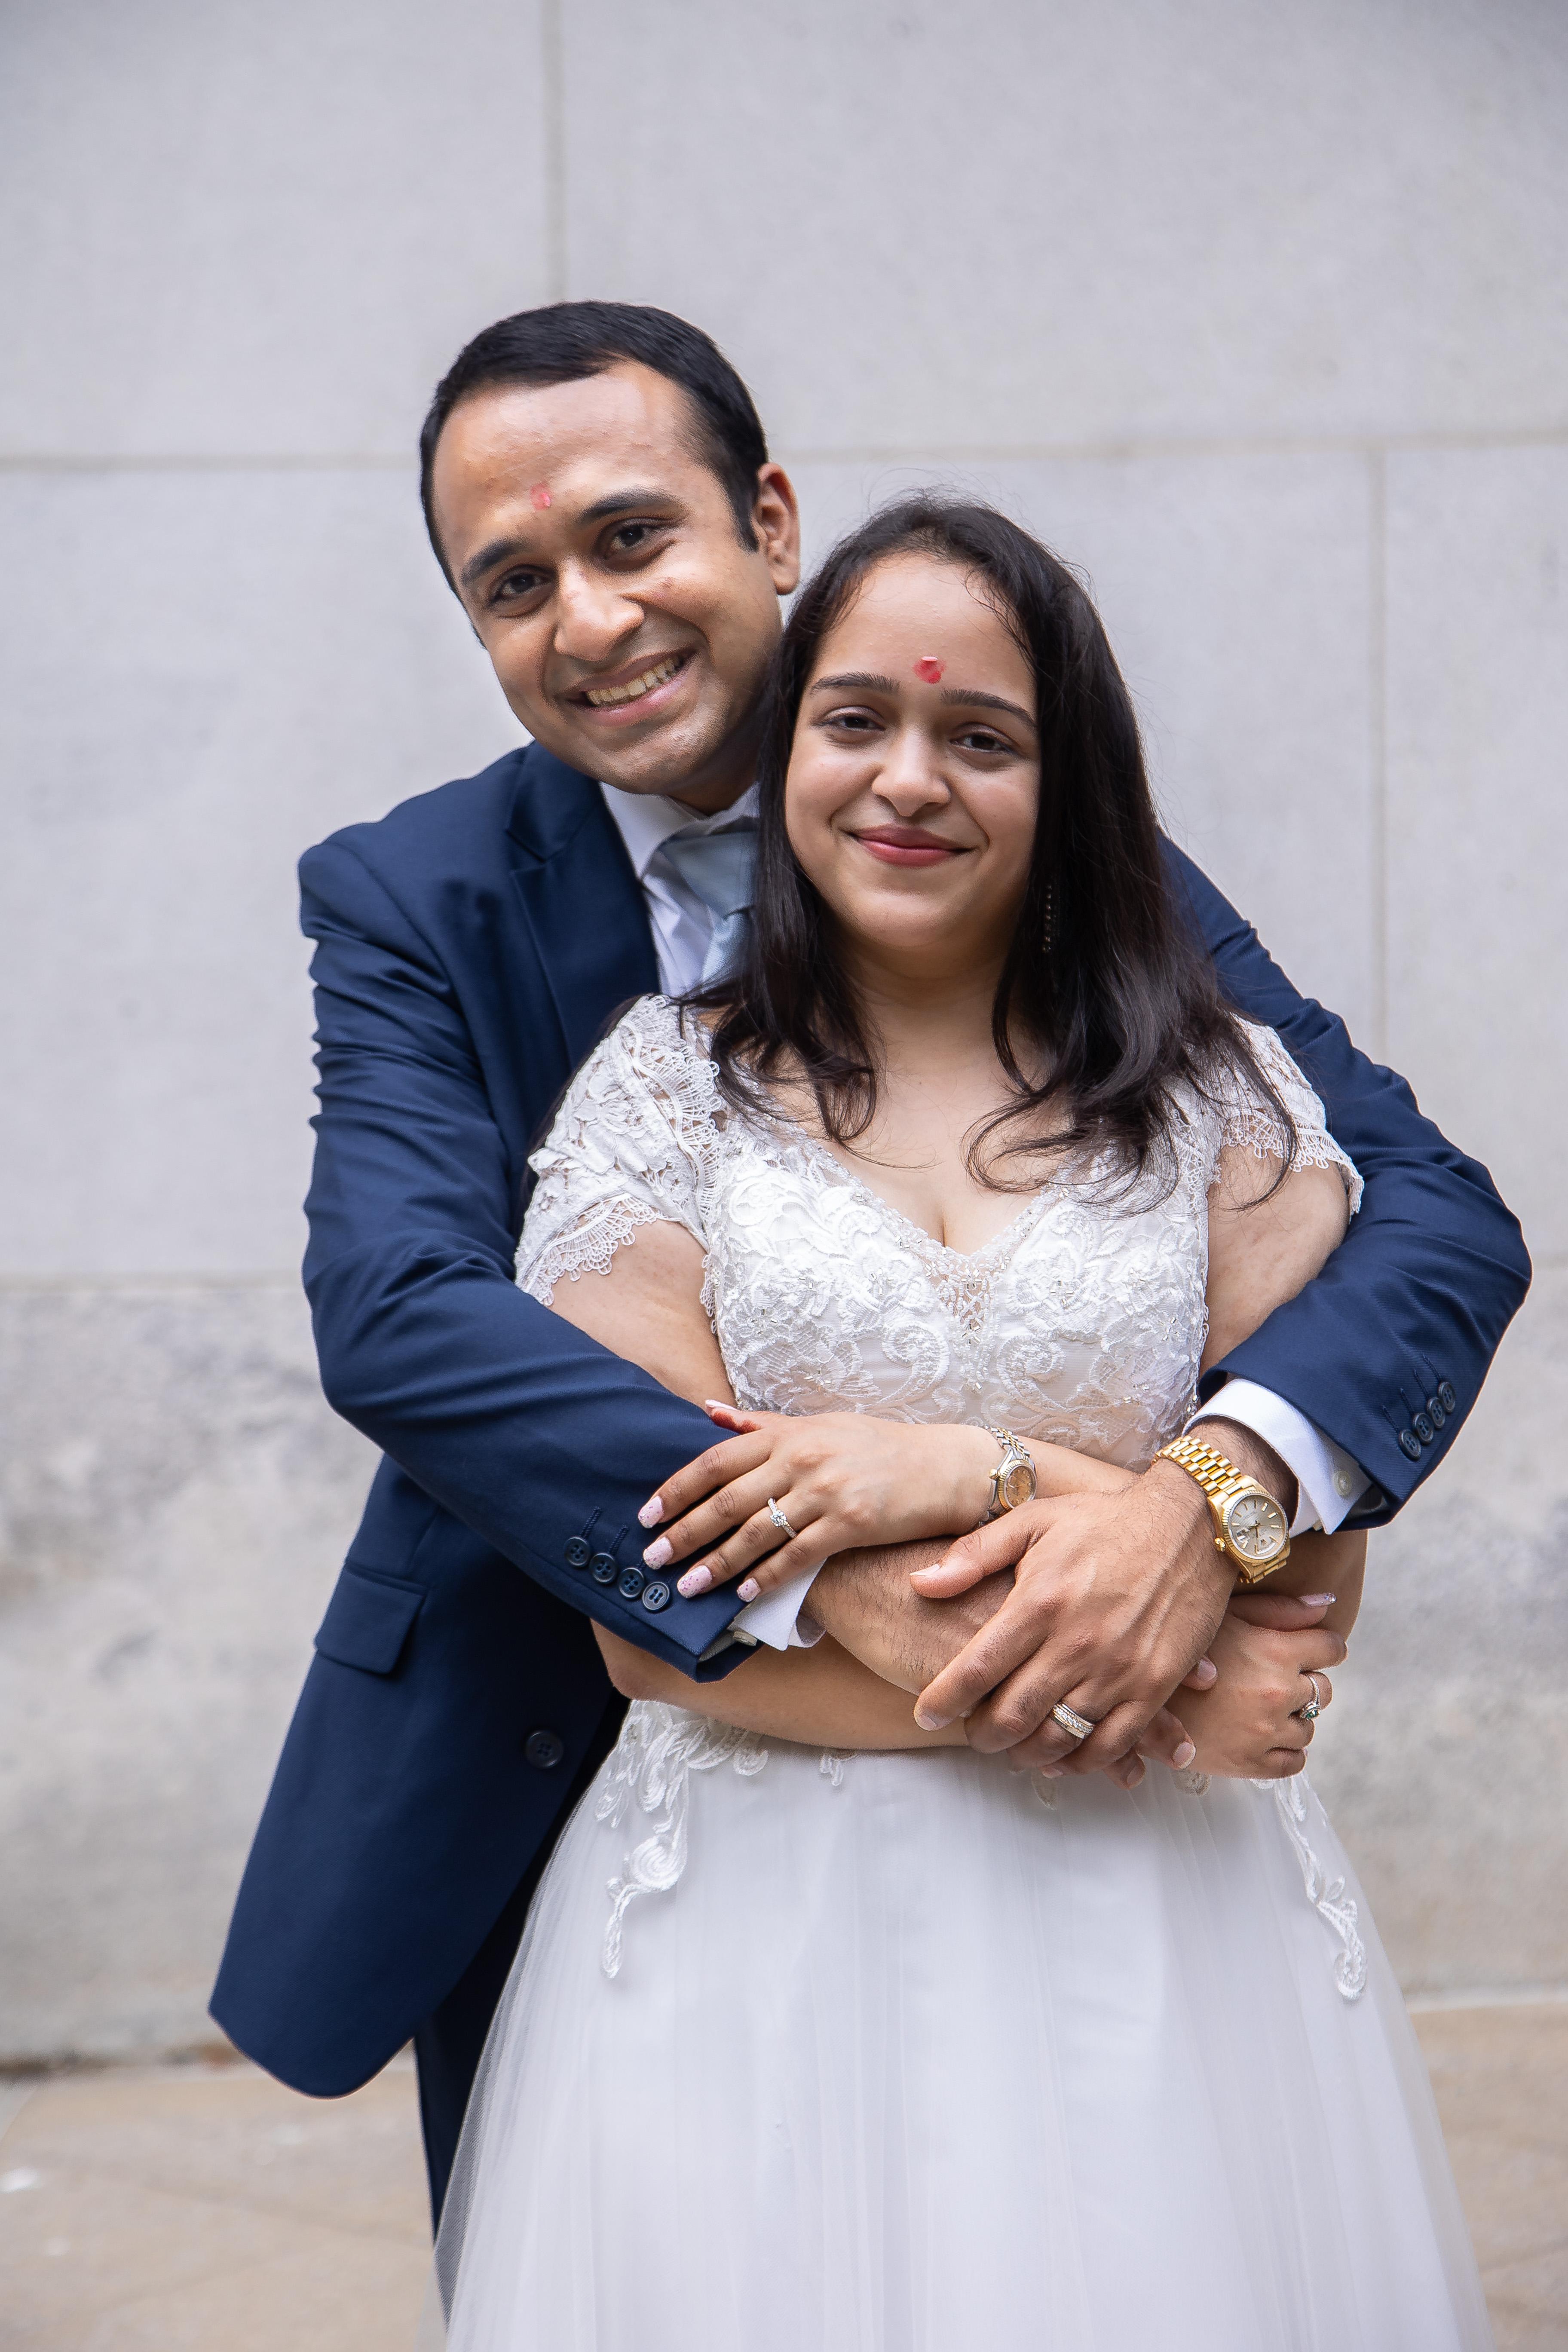 The Wedding Website of Sagar Khona and Taniya Jain